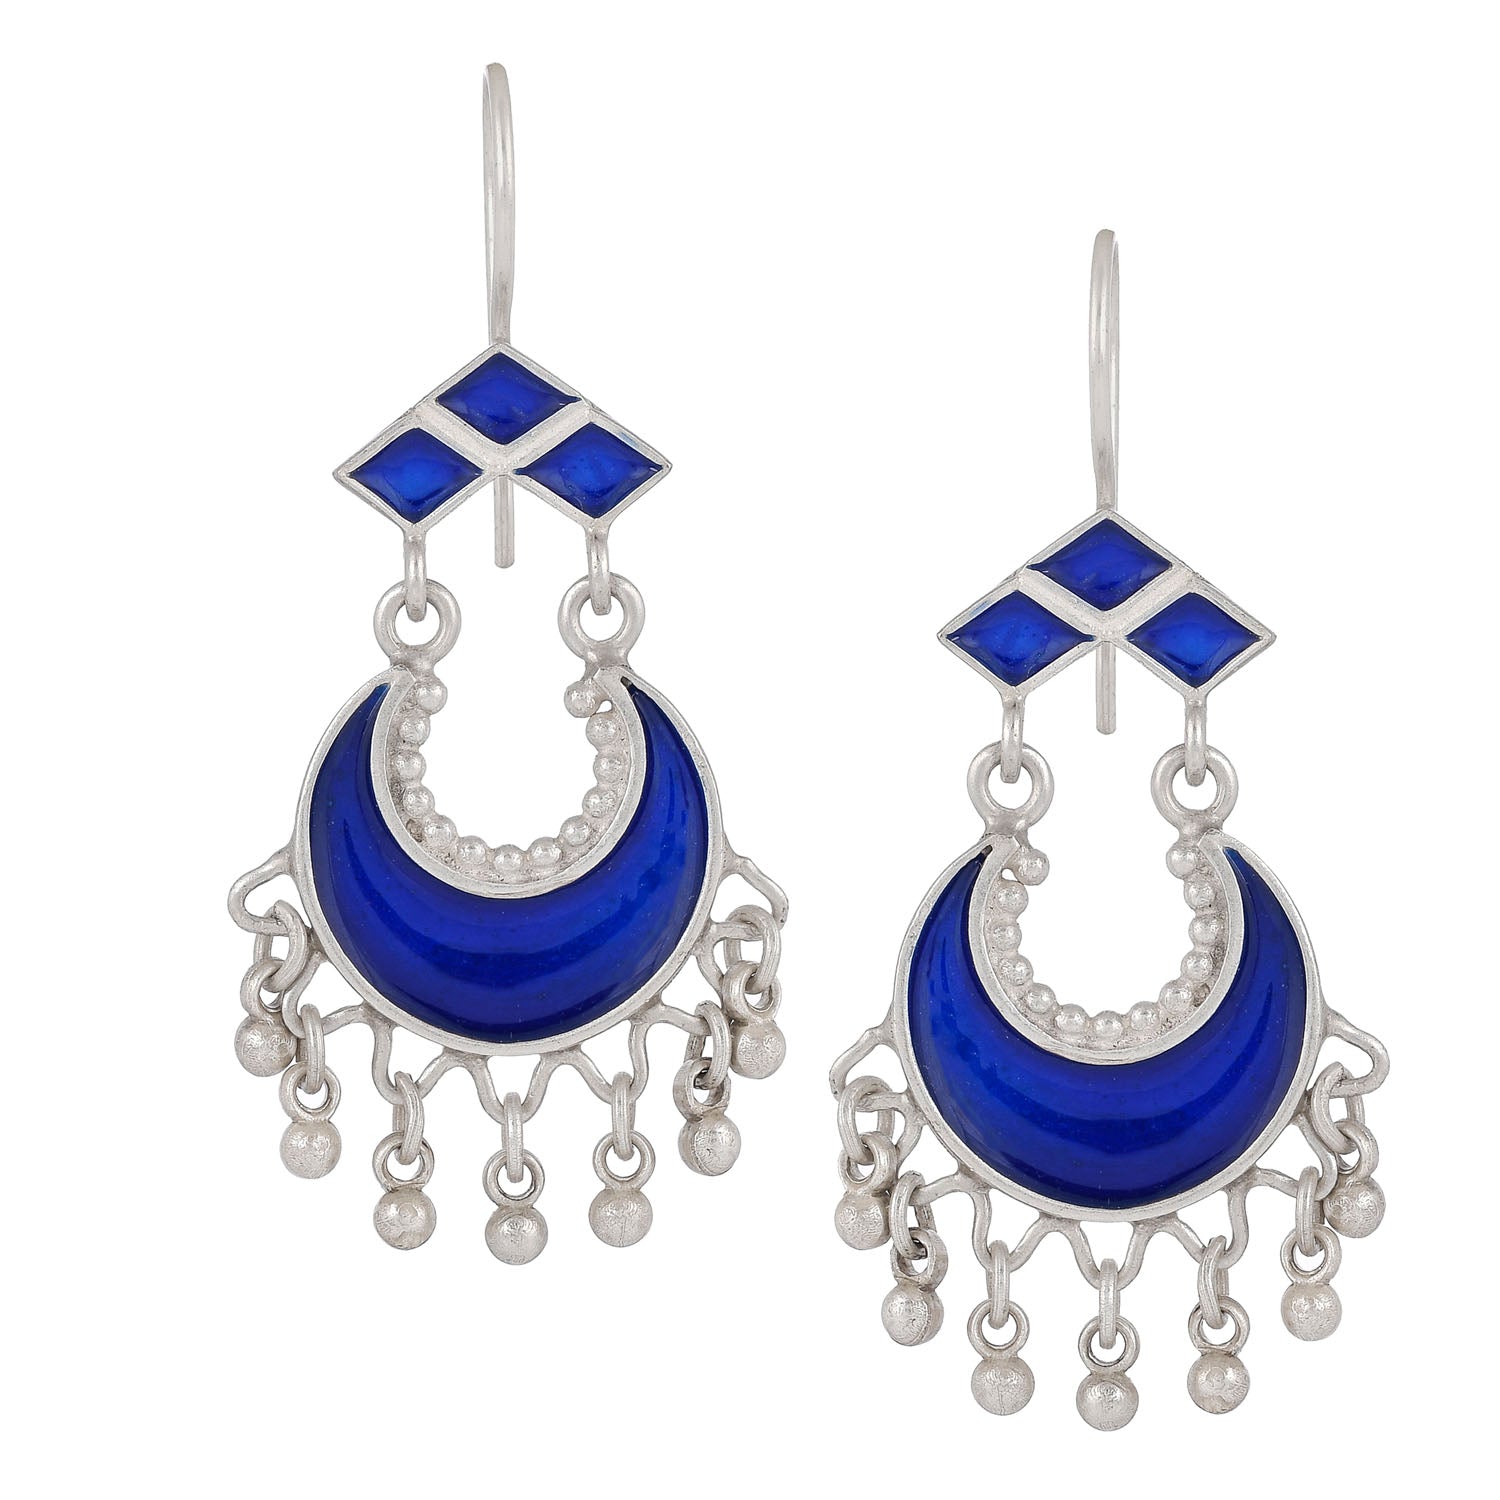 Dangling Handmade Beaded Earrings (2 Bicone Shaped Beads in Navy Blue)